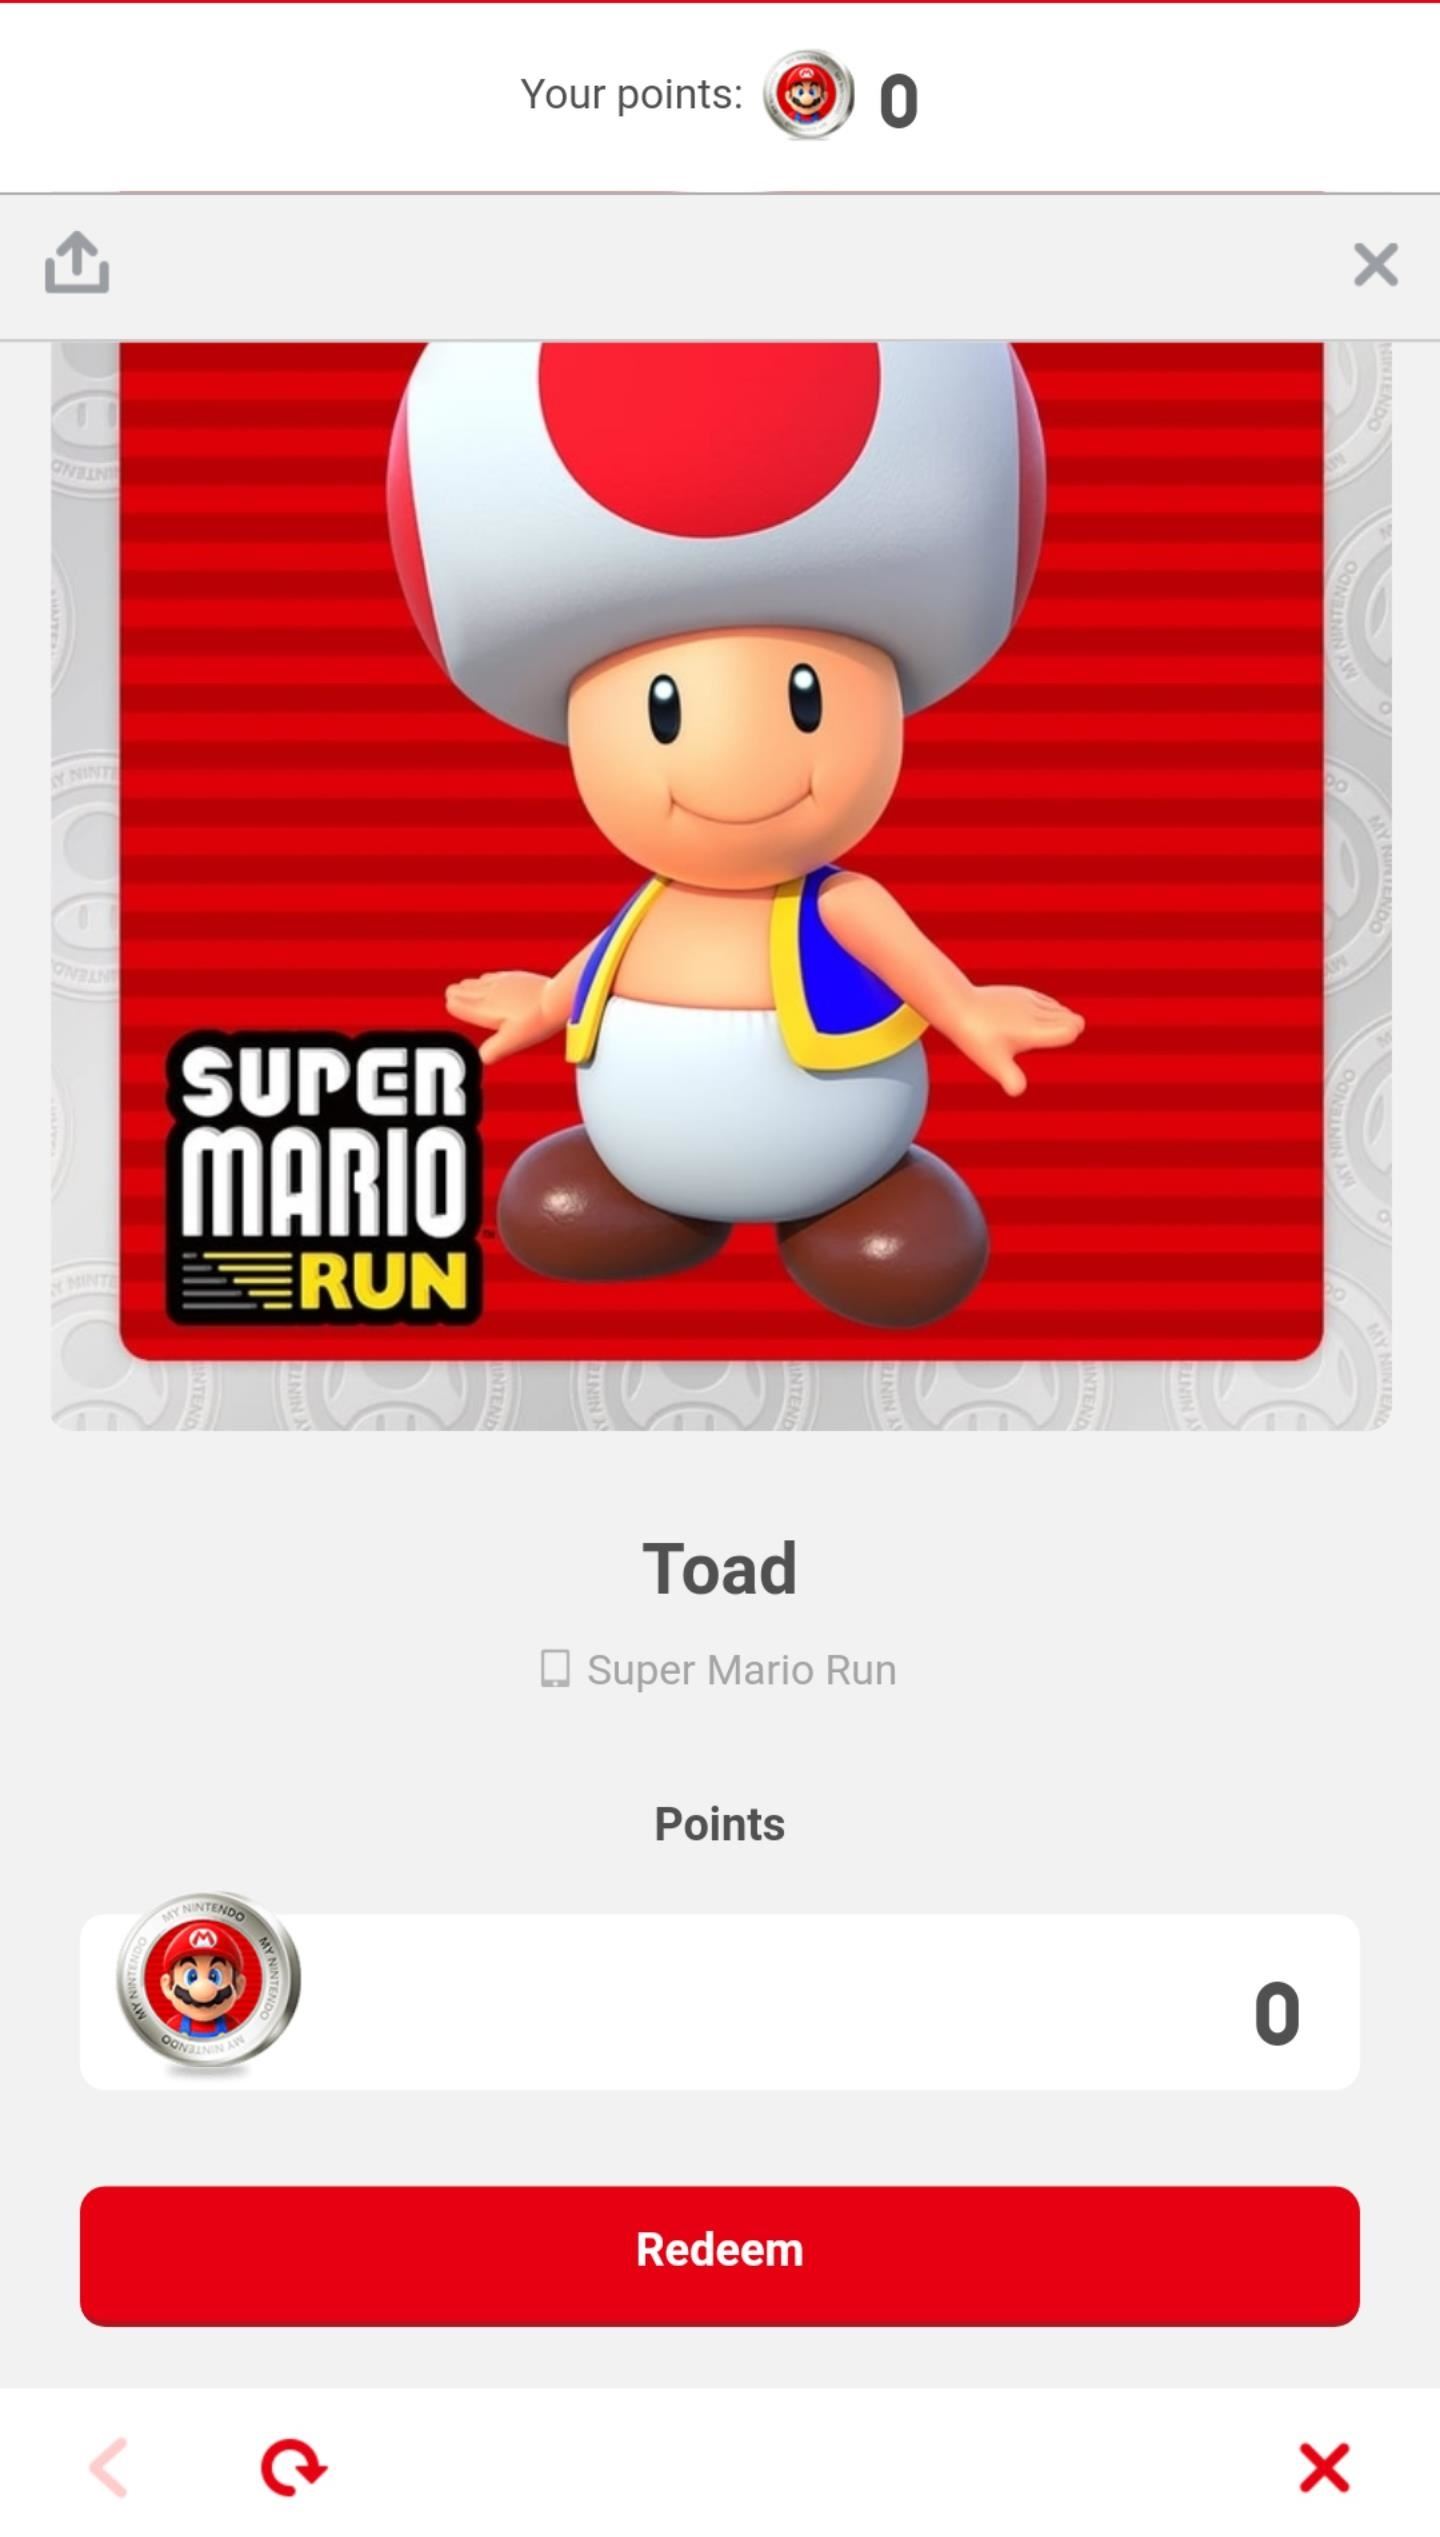 Super Mario Run 101: How to Unlock Toad